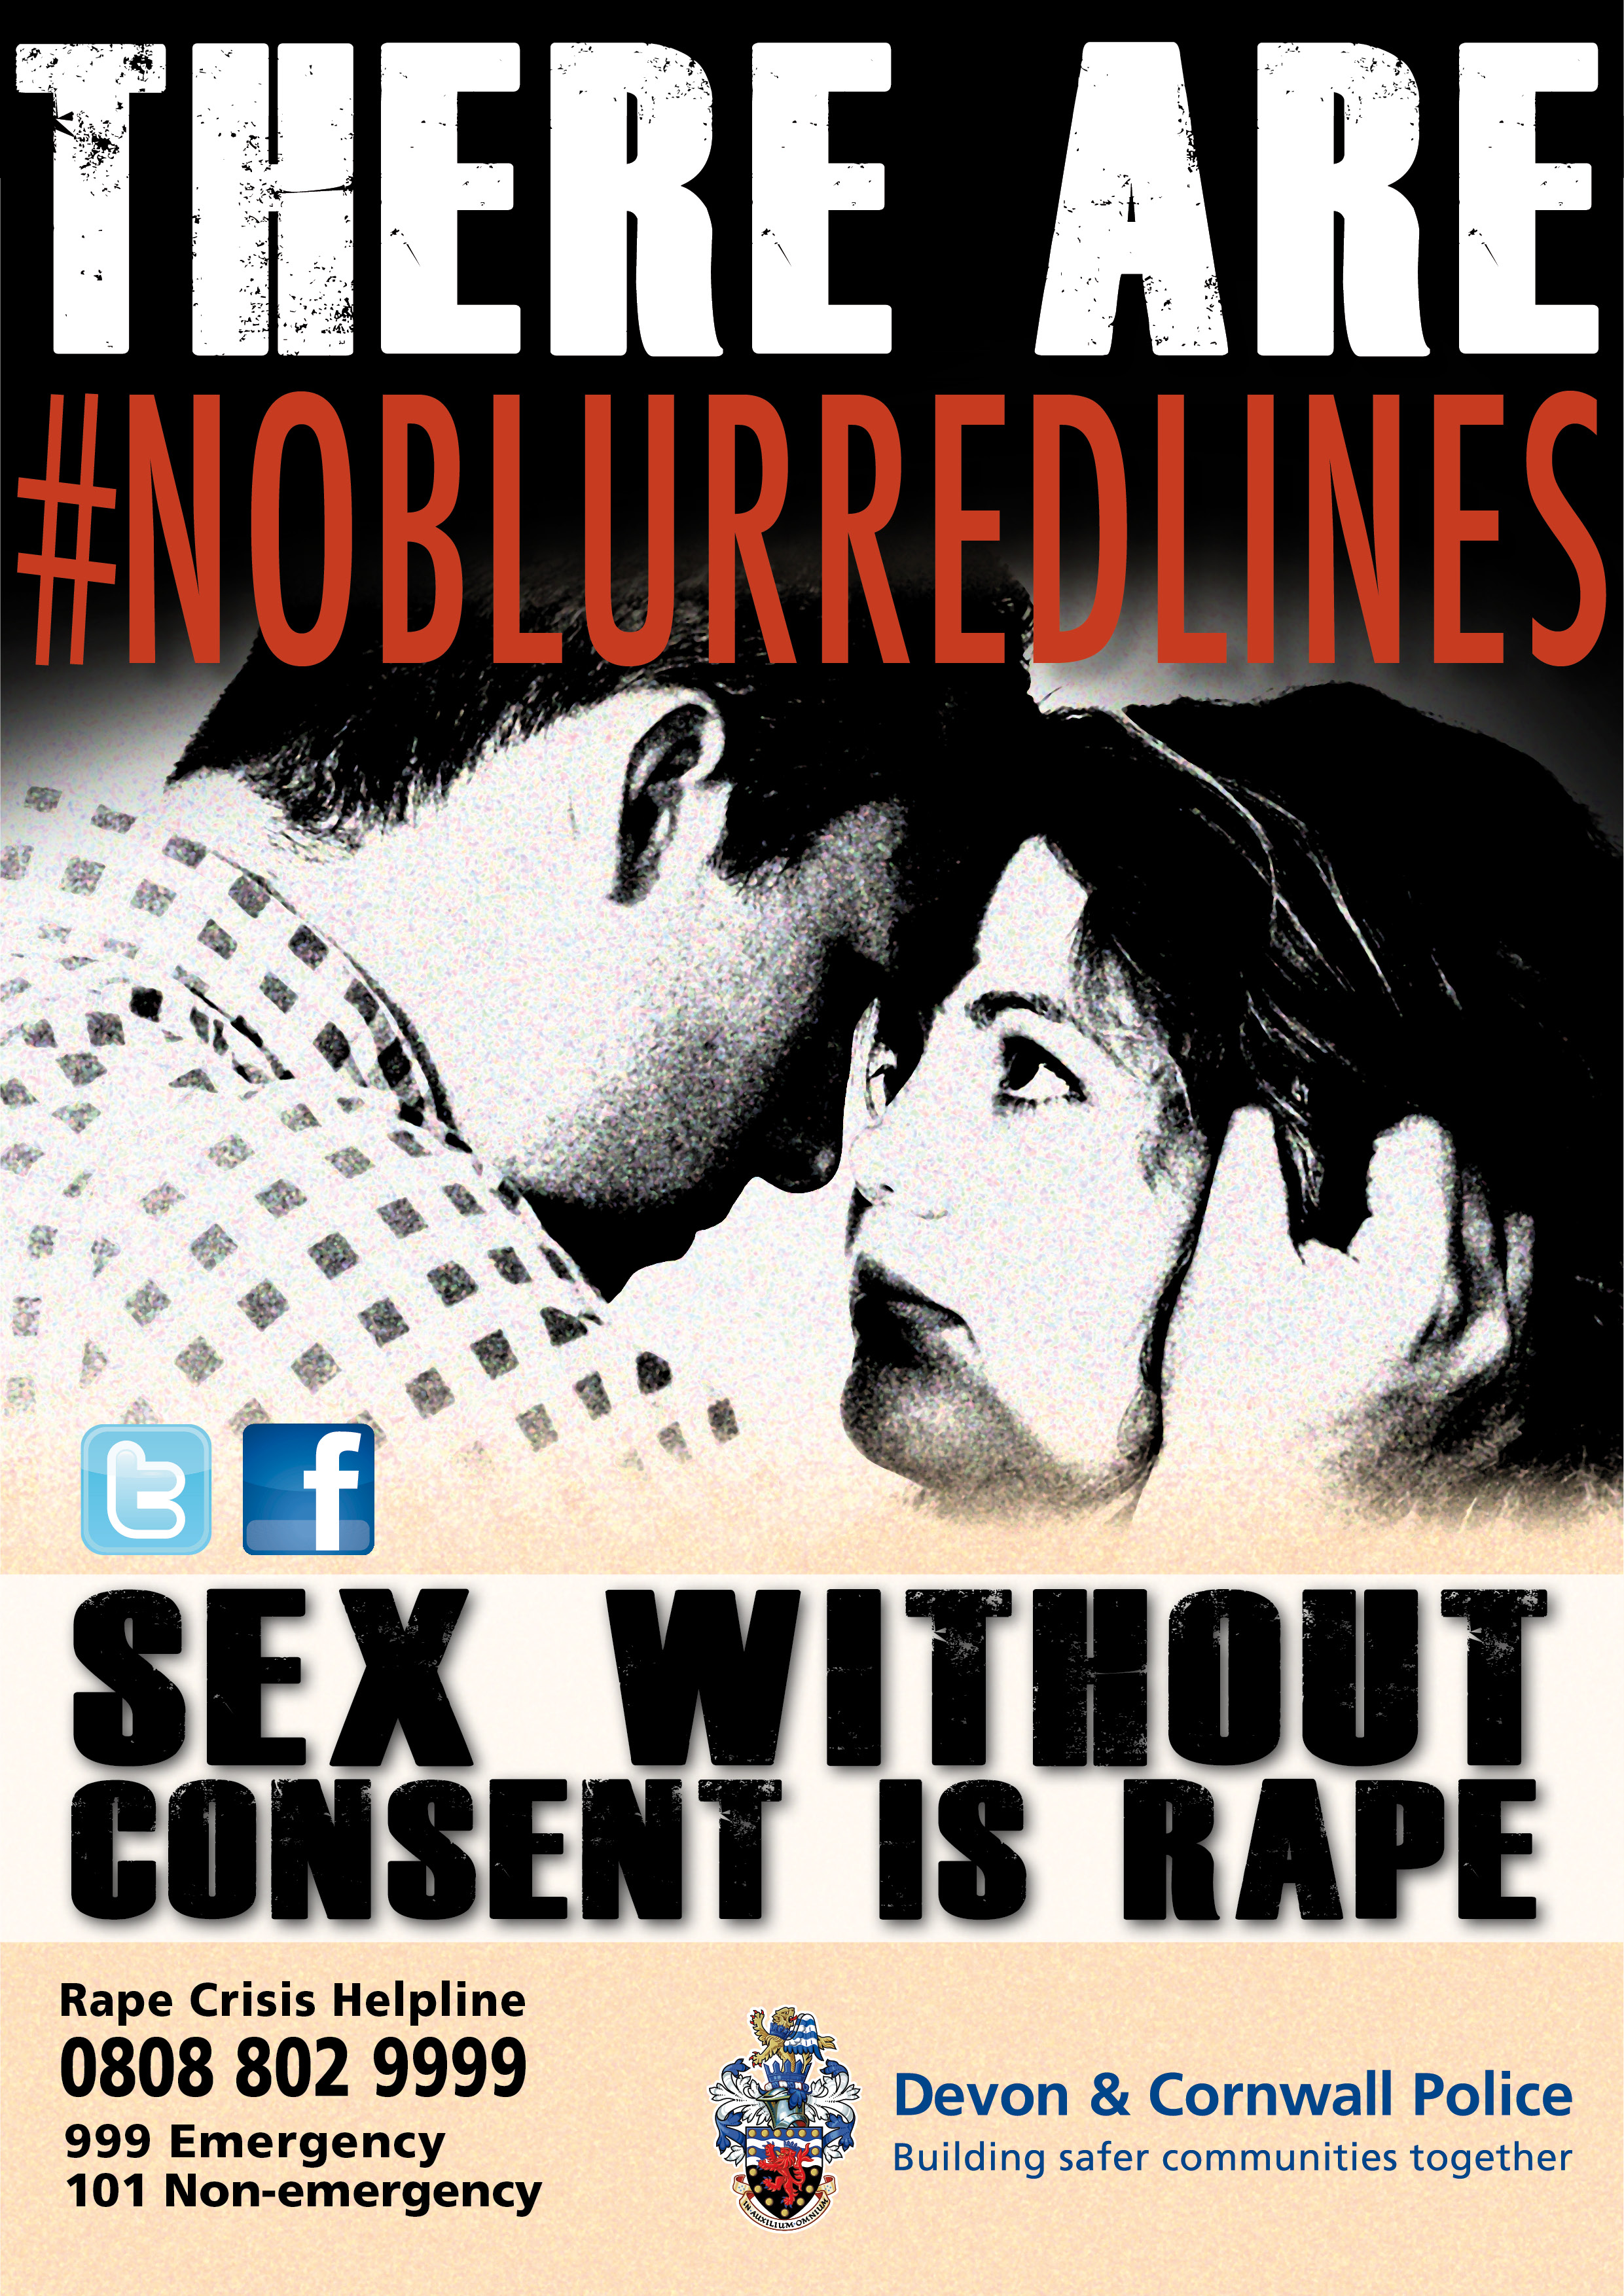 blurred lines rape